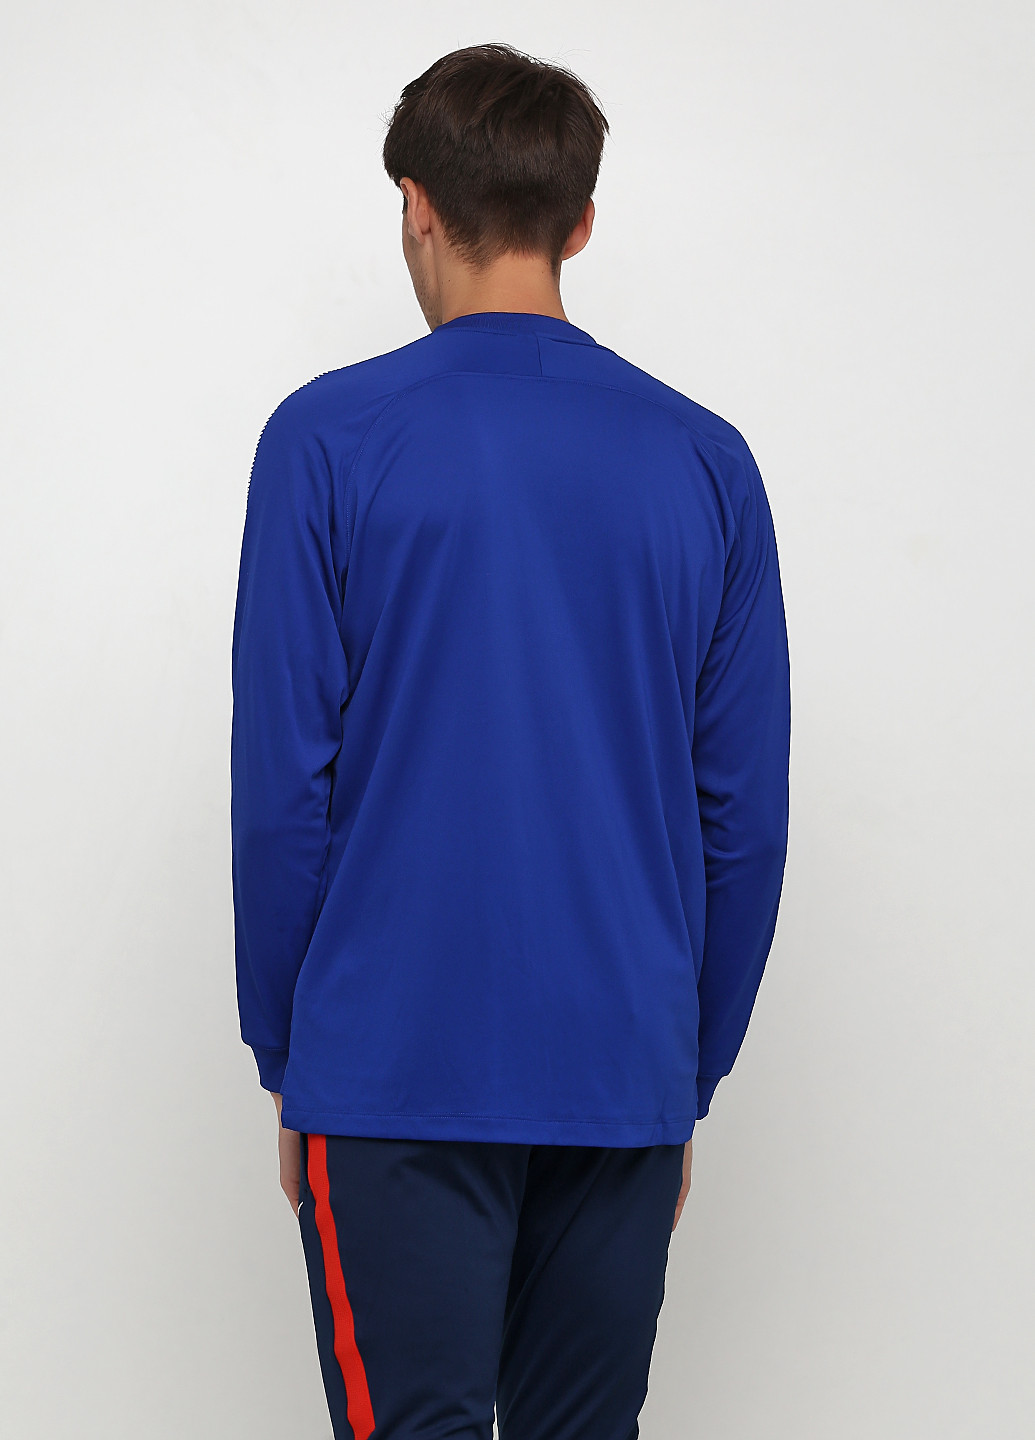 Кофта Nike Chelsea FC Traning Jacket M 905453-454